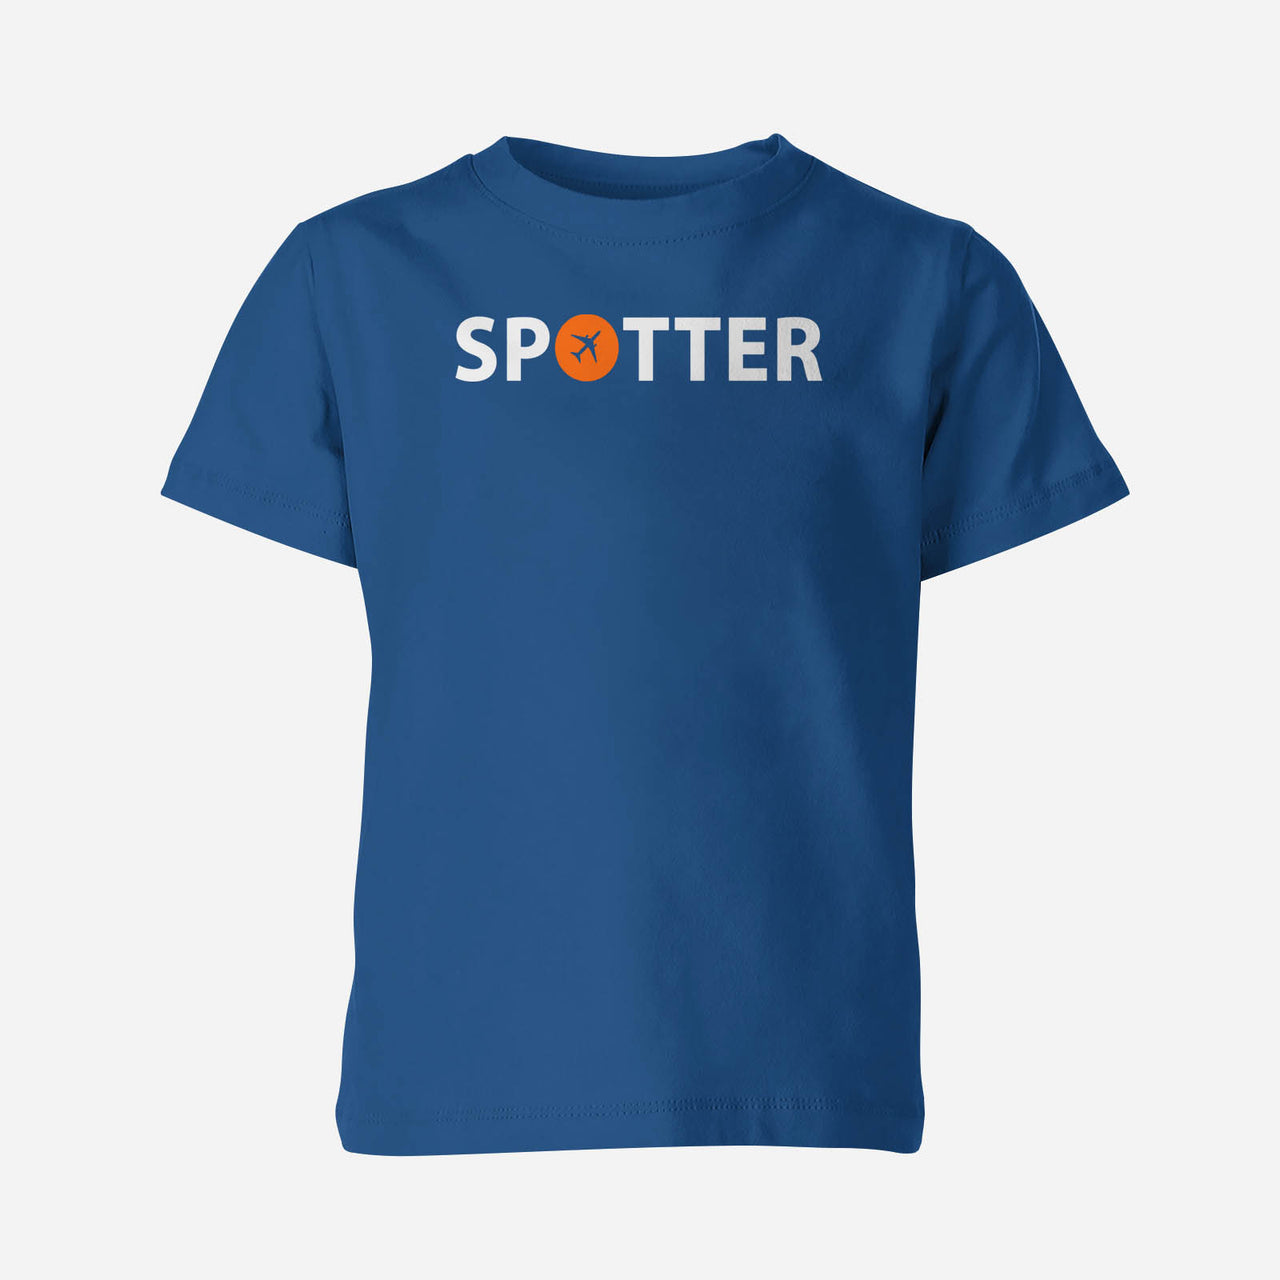 Spotter Designed Children T-Shirts